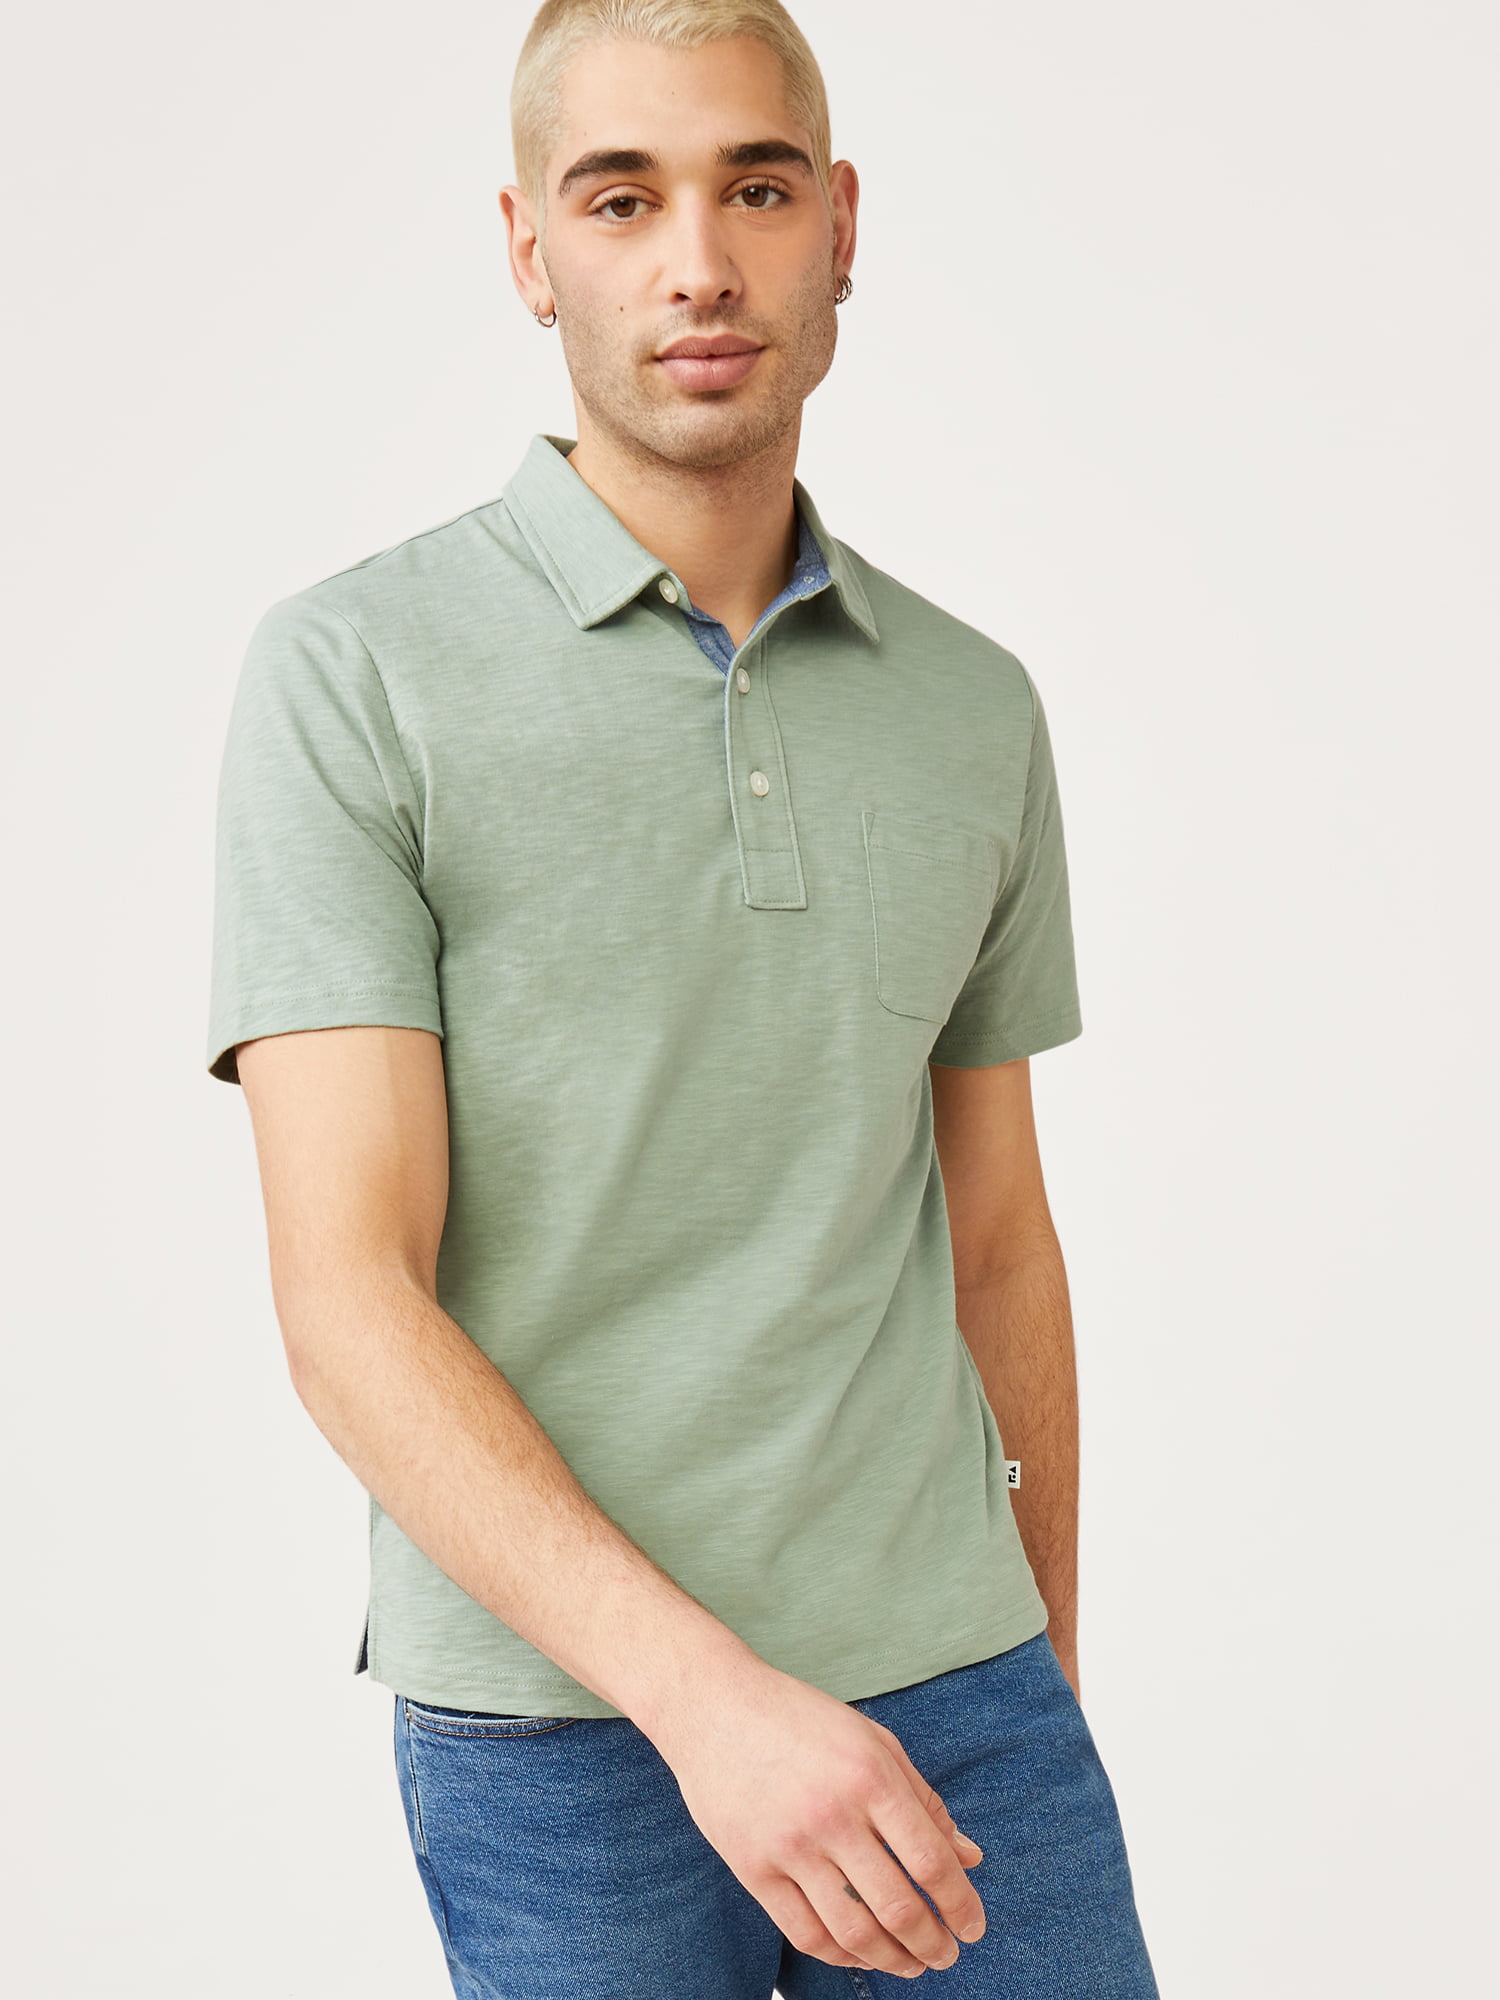 Free Assembly Men's Short Sleeve Polo Shirt with Pocket - Walmart.com